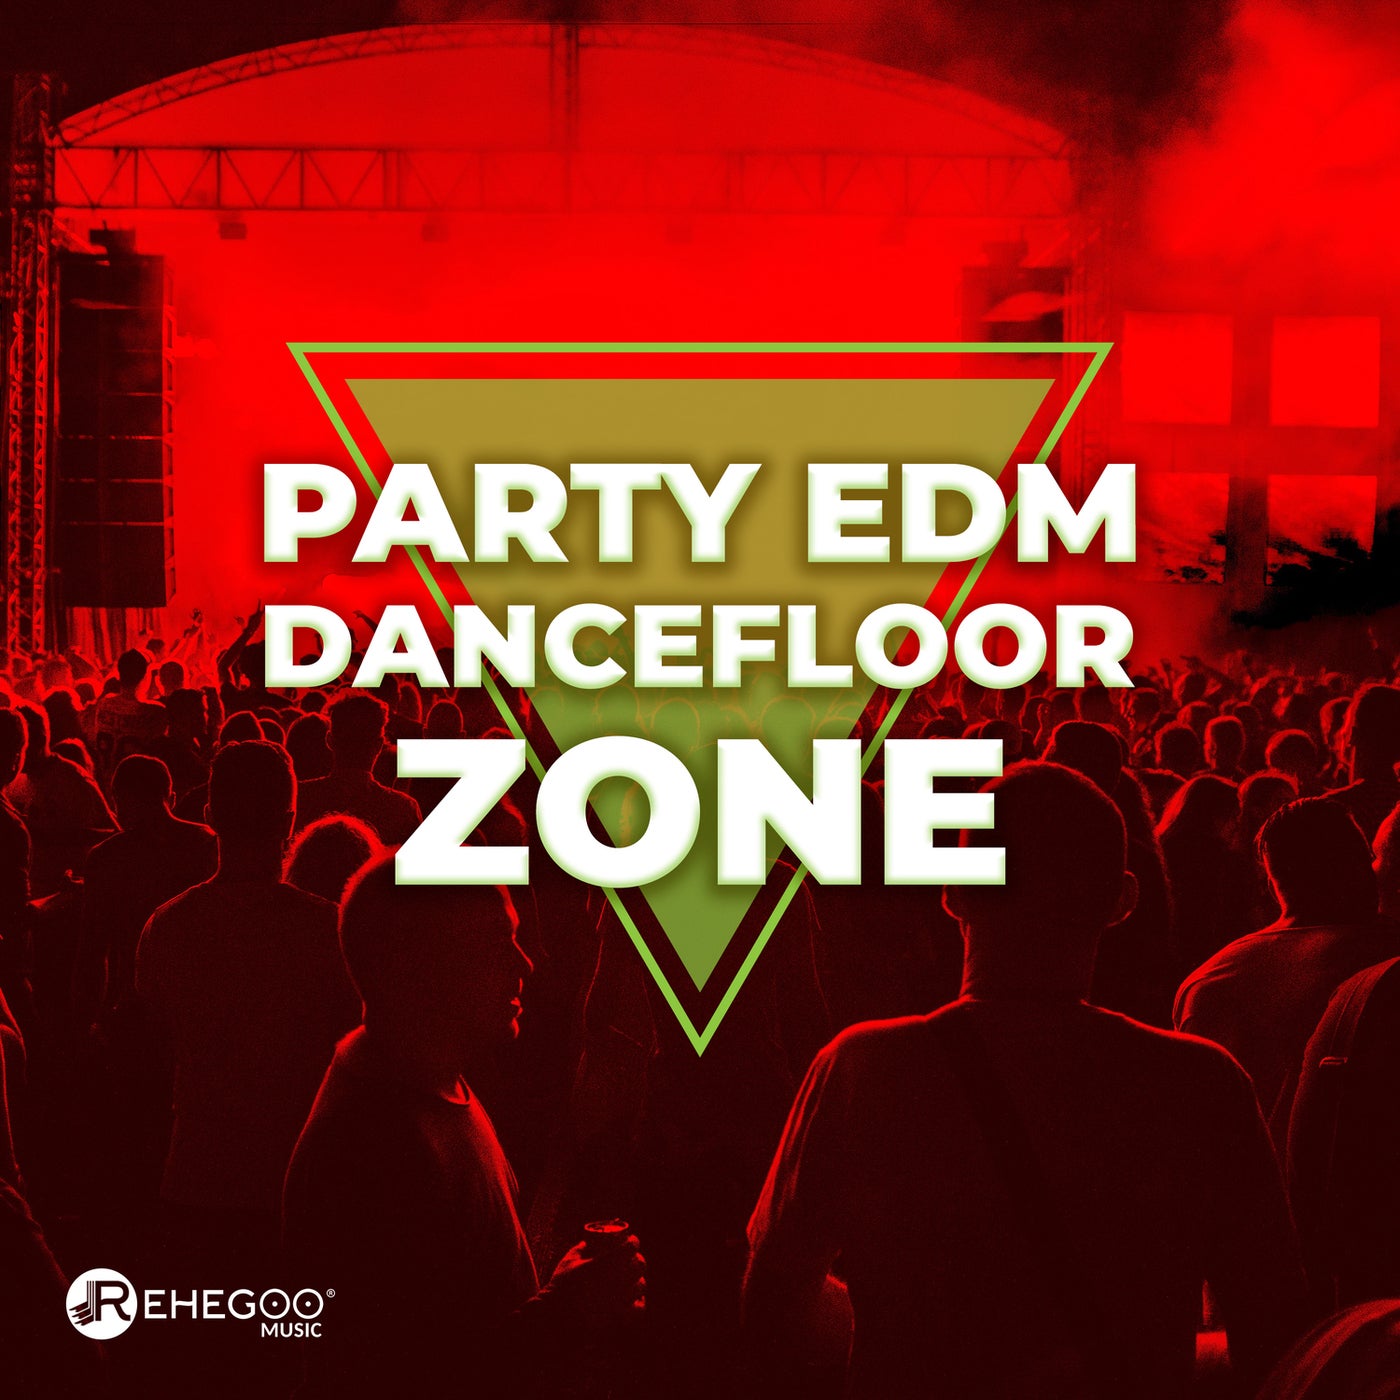 Party EDM Dancefloor Zone